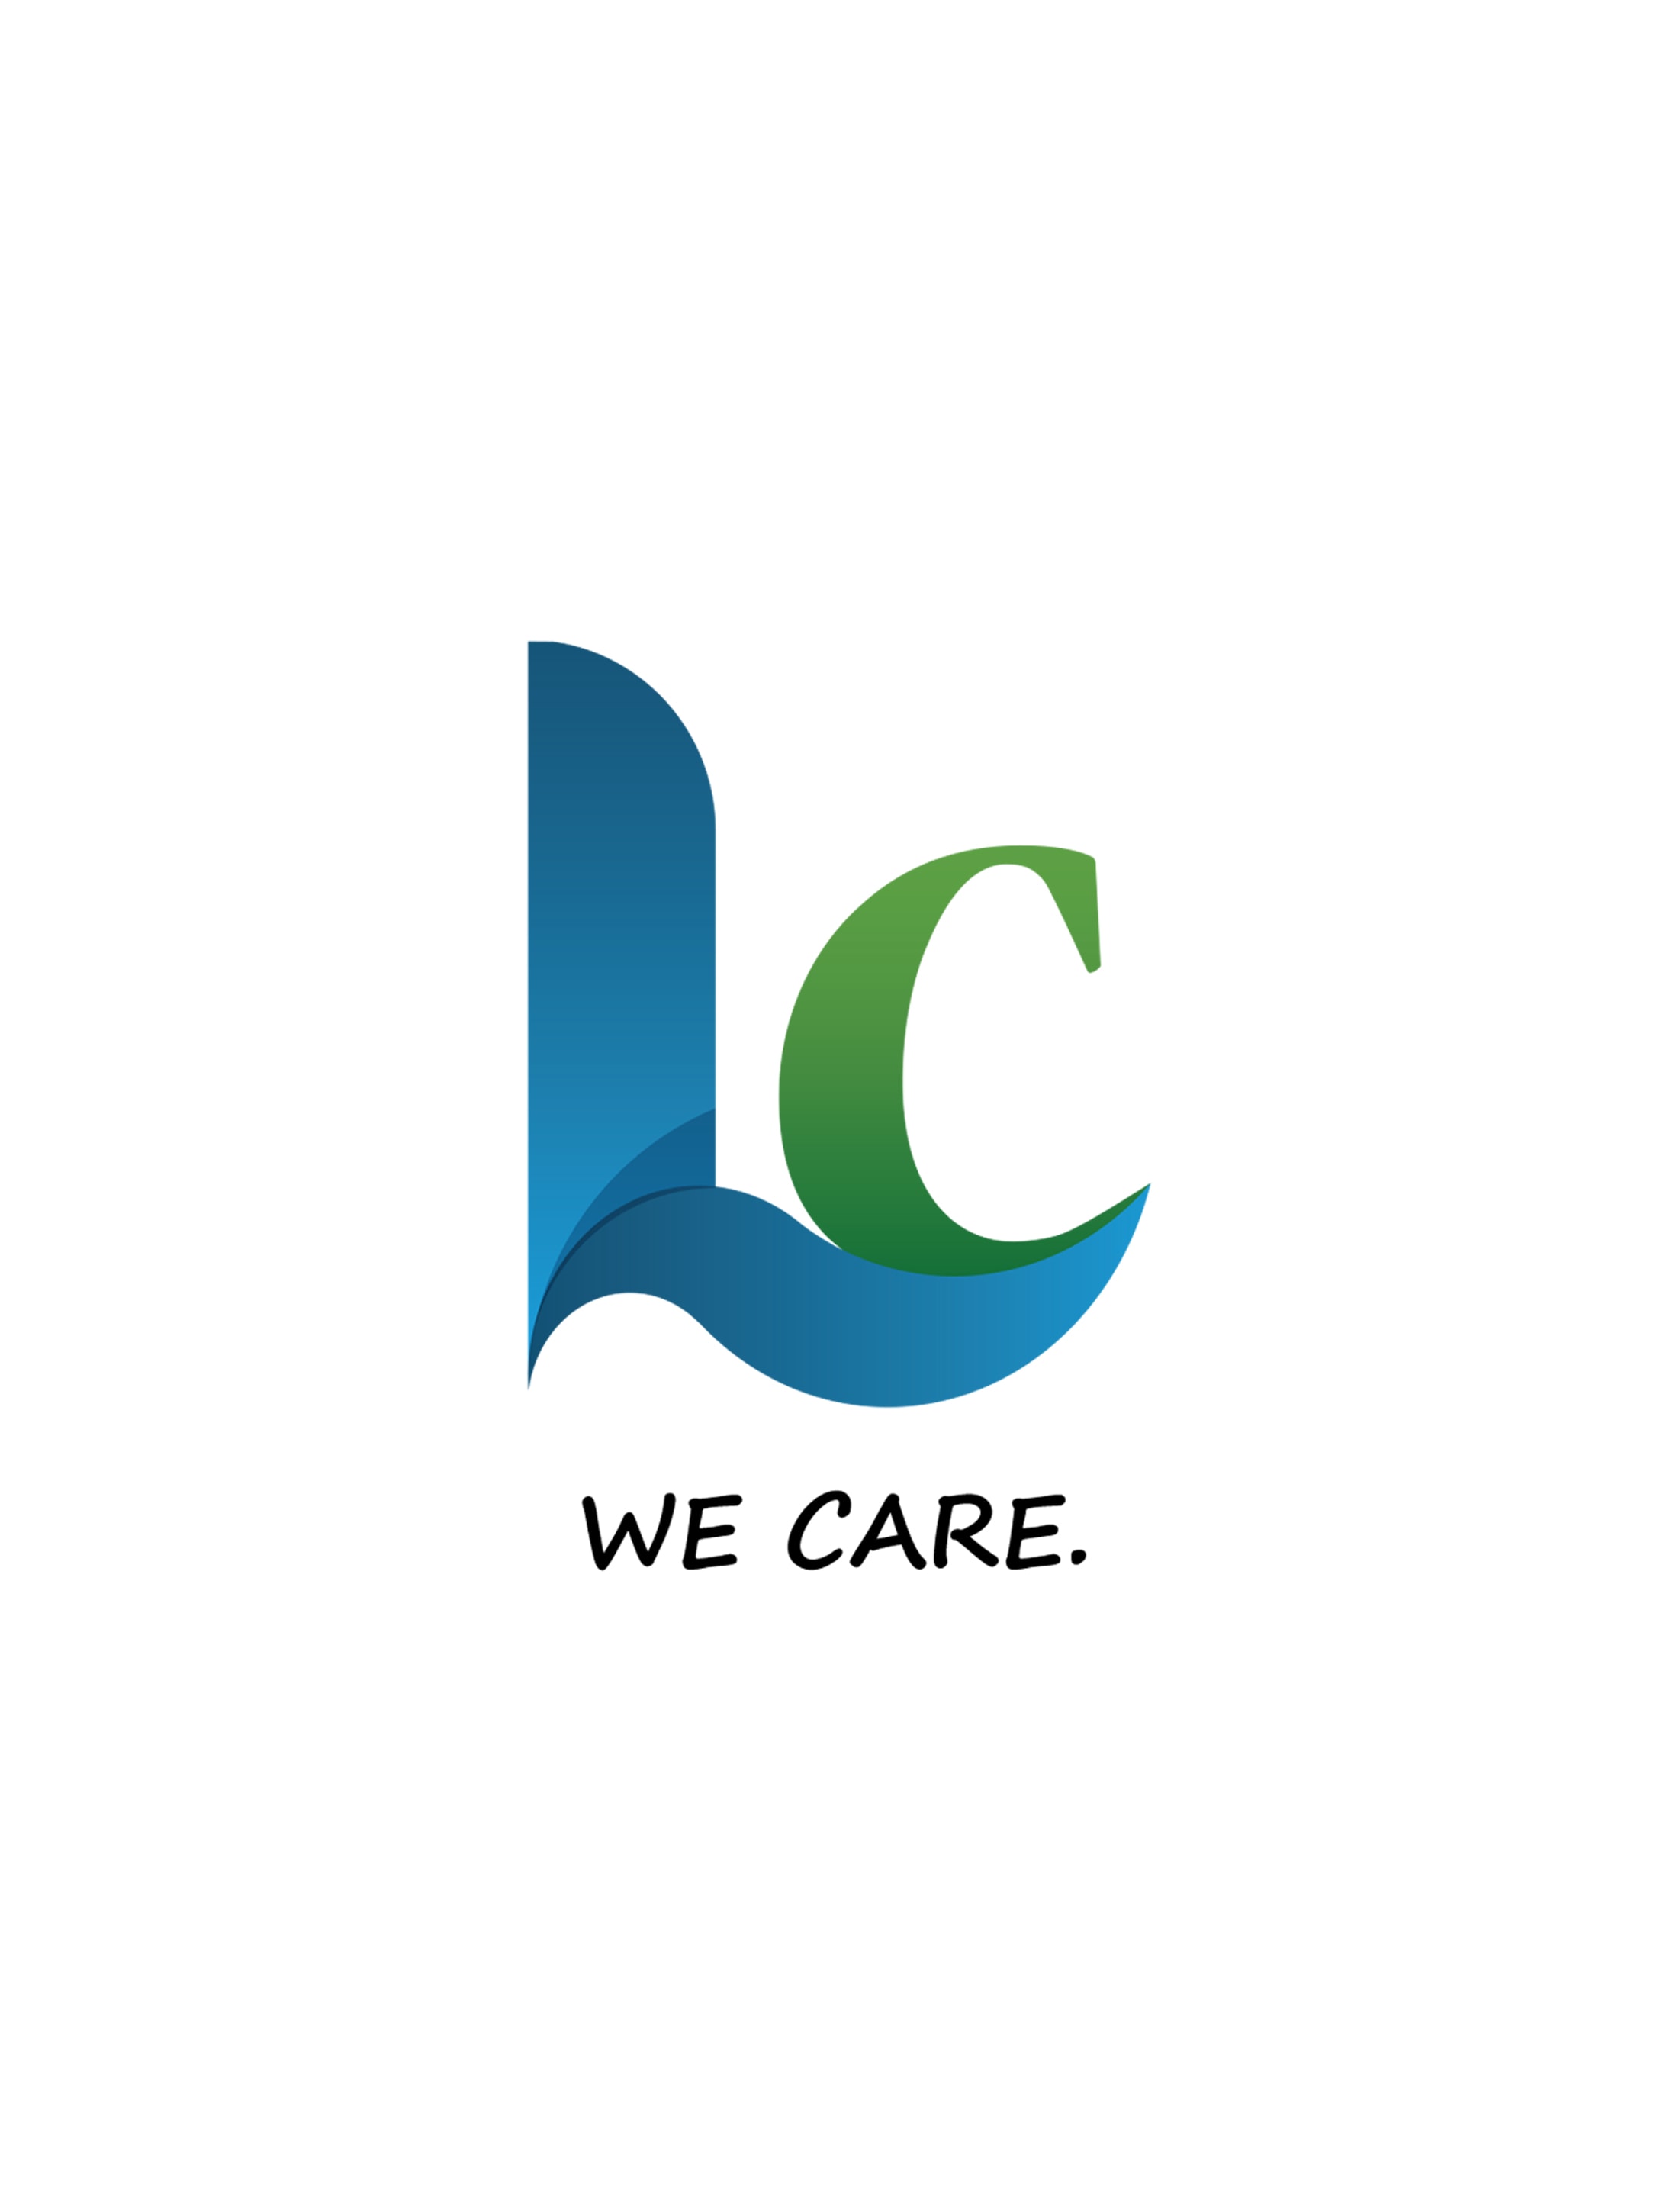 LifeCare Services